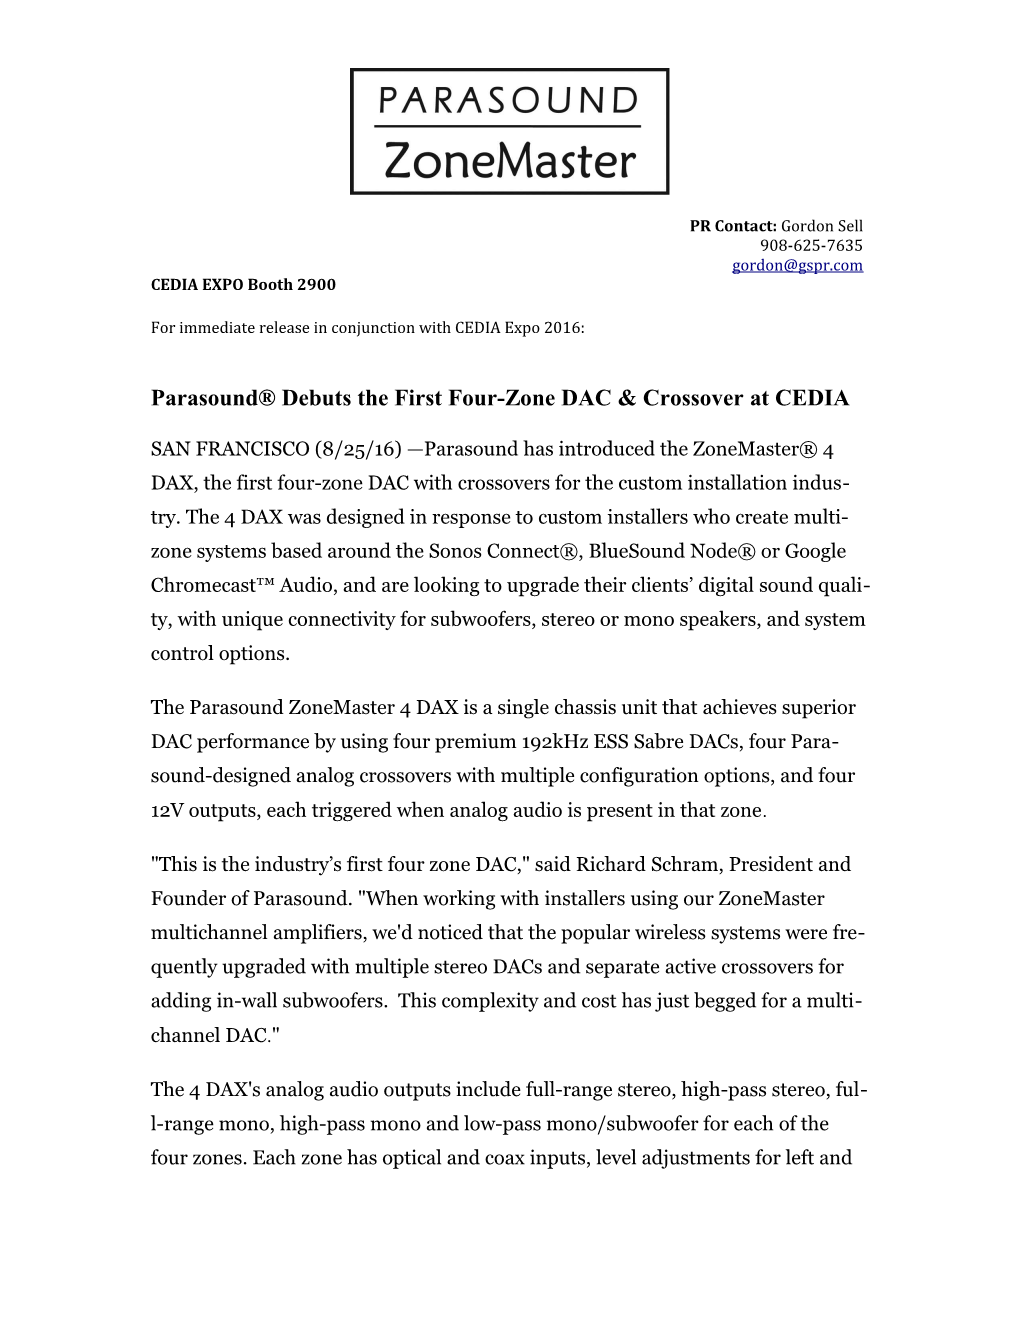 Parasound Zonemaster Line Expansion Page